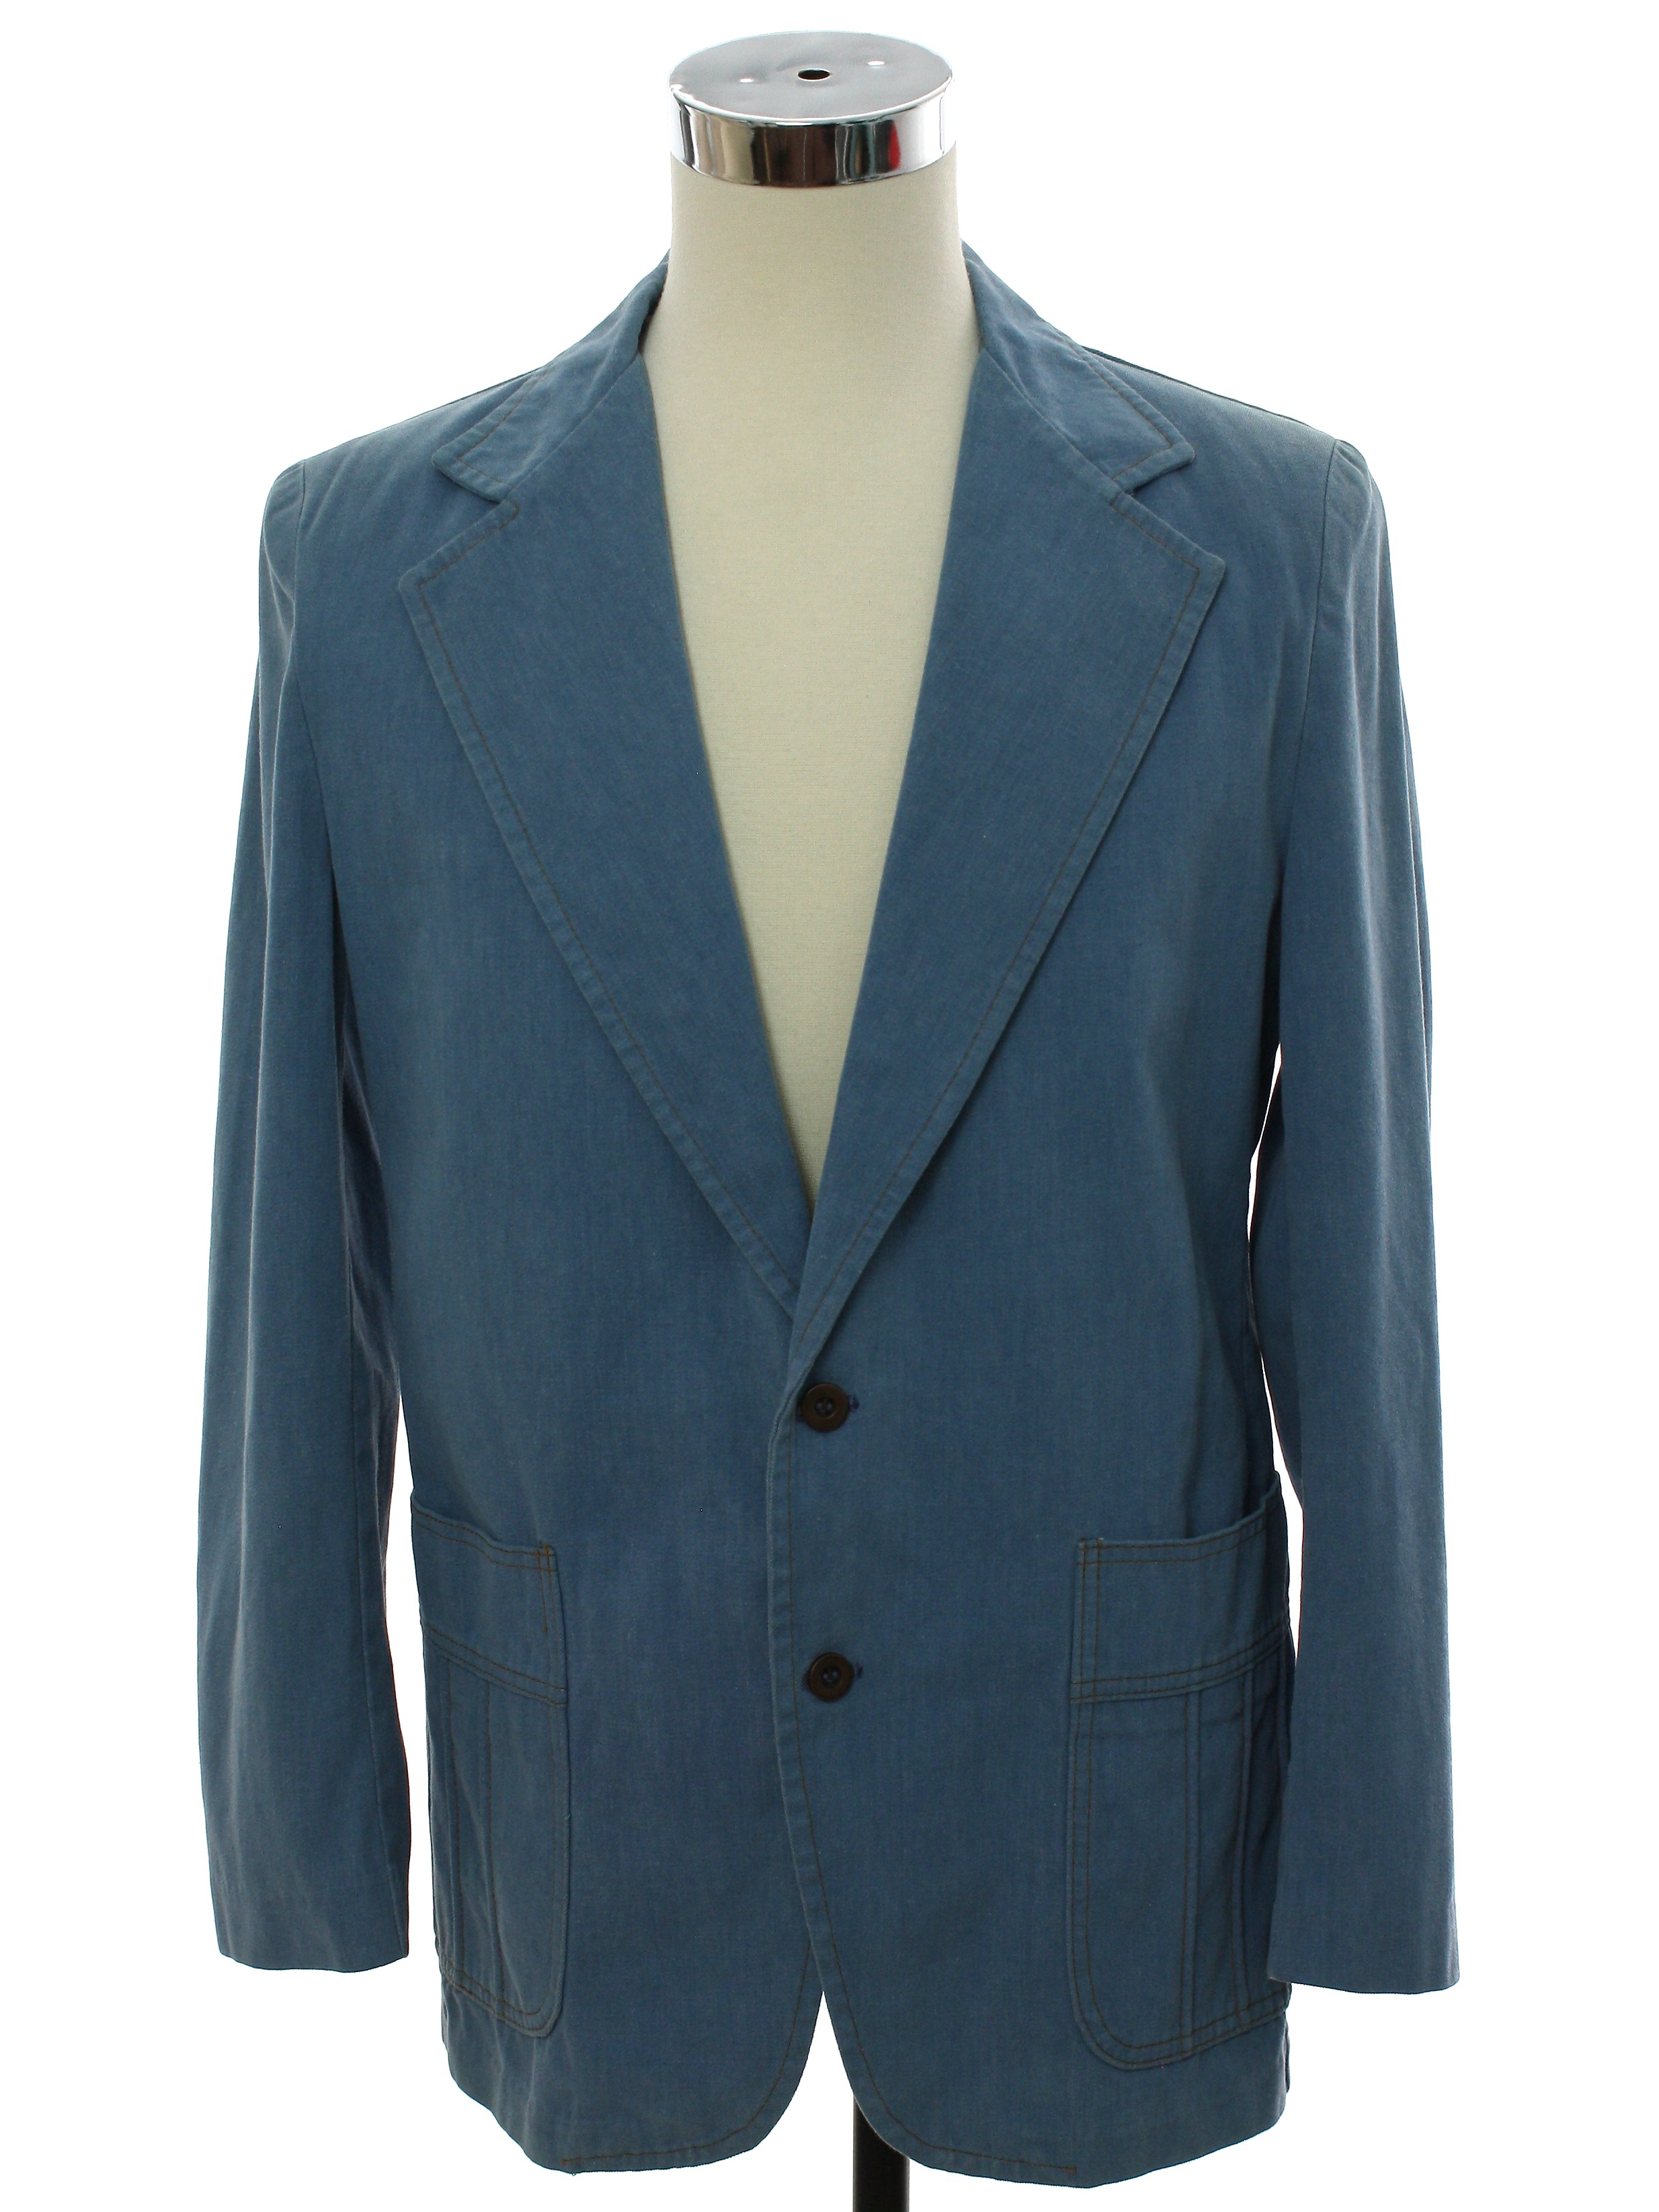 Retro 1970's Jacket (Sears) : 70s -Sears- Mens light blue background ...